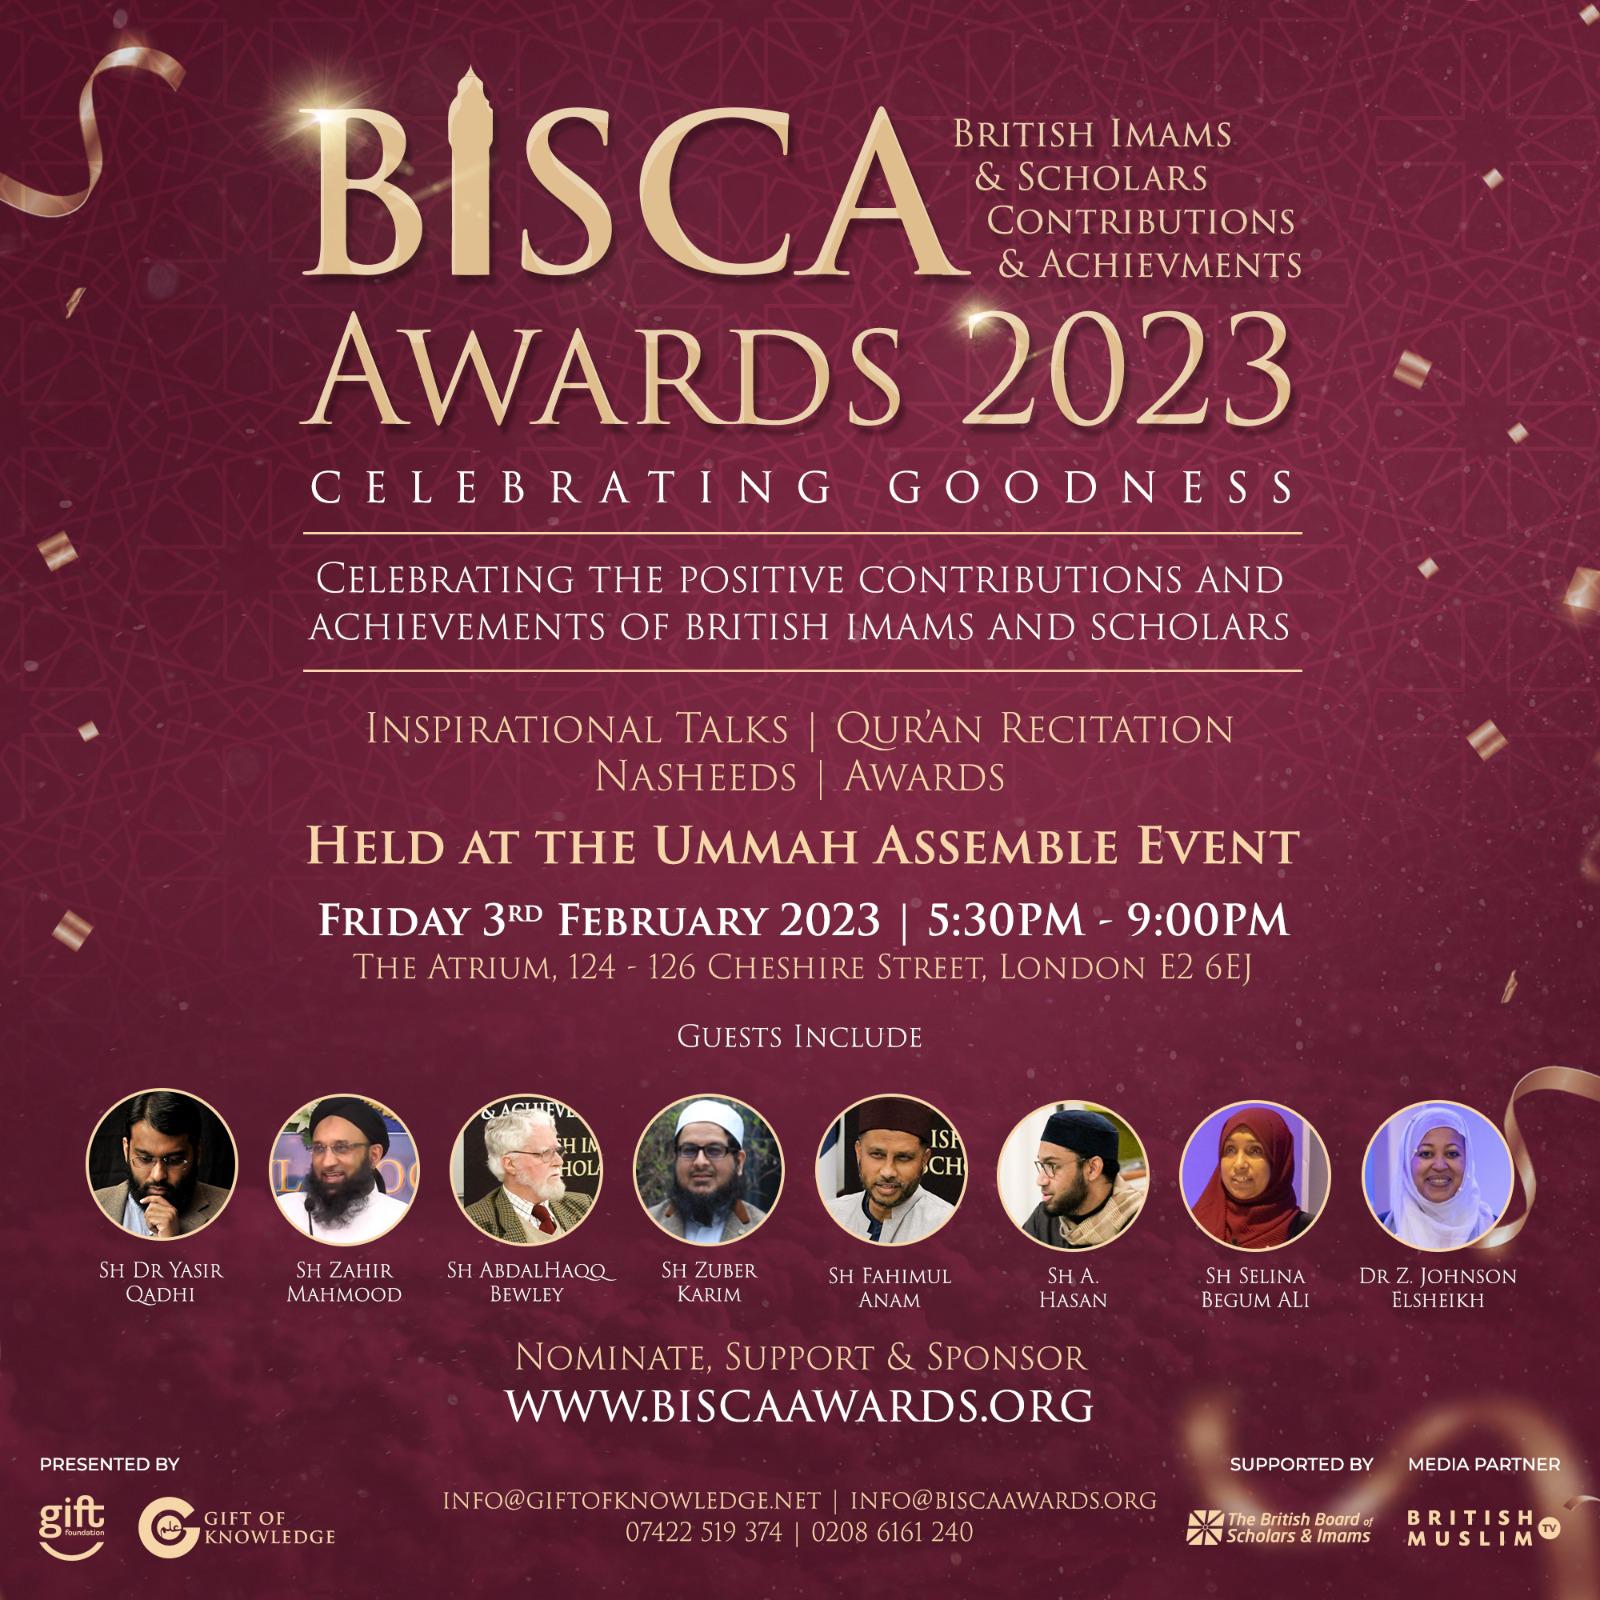 BISCA AWARDS 2023 CELEBRATING GOODNESS